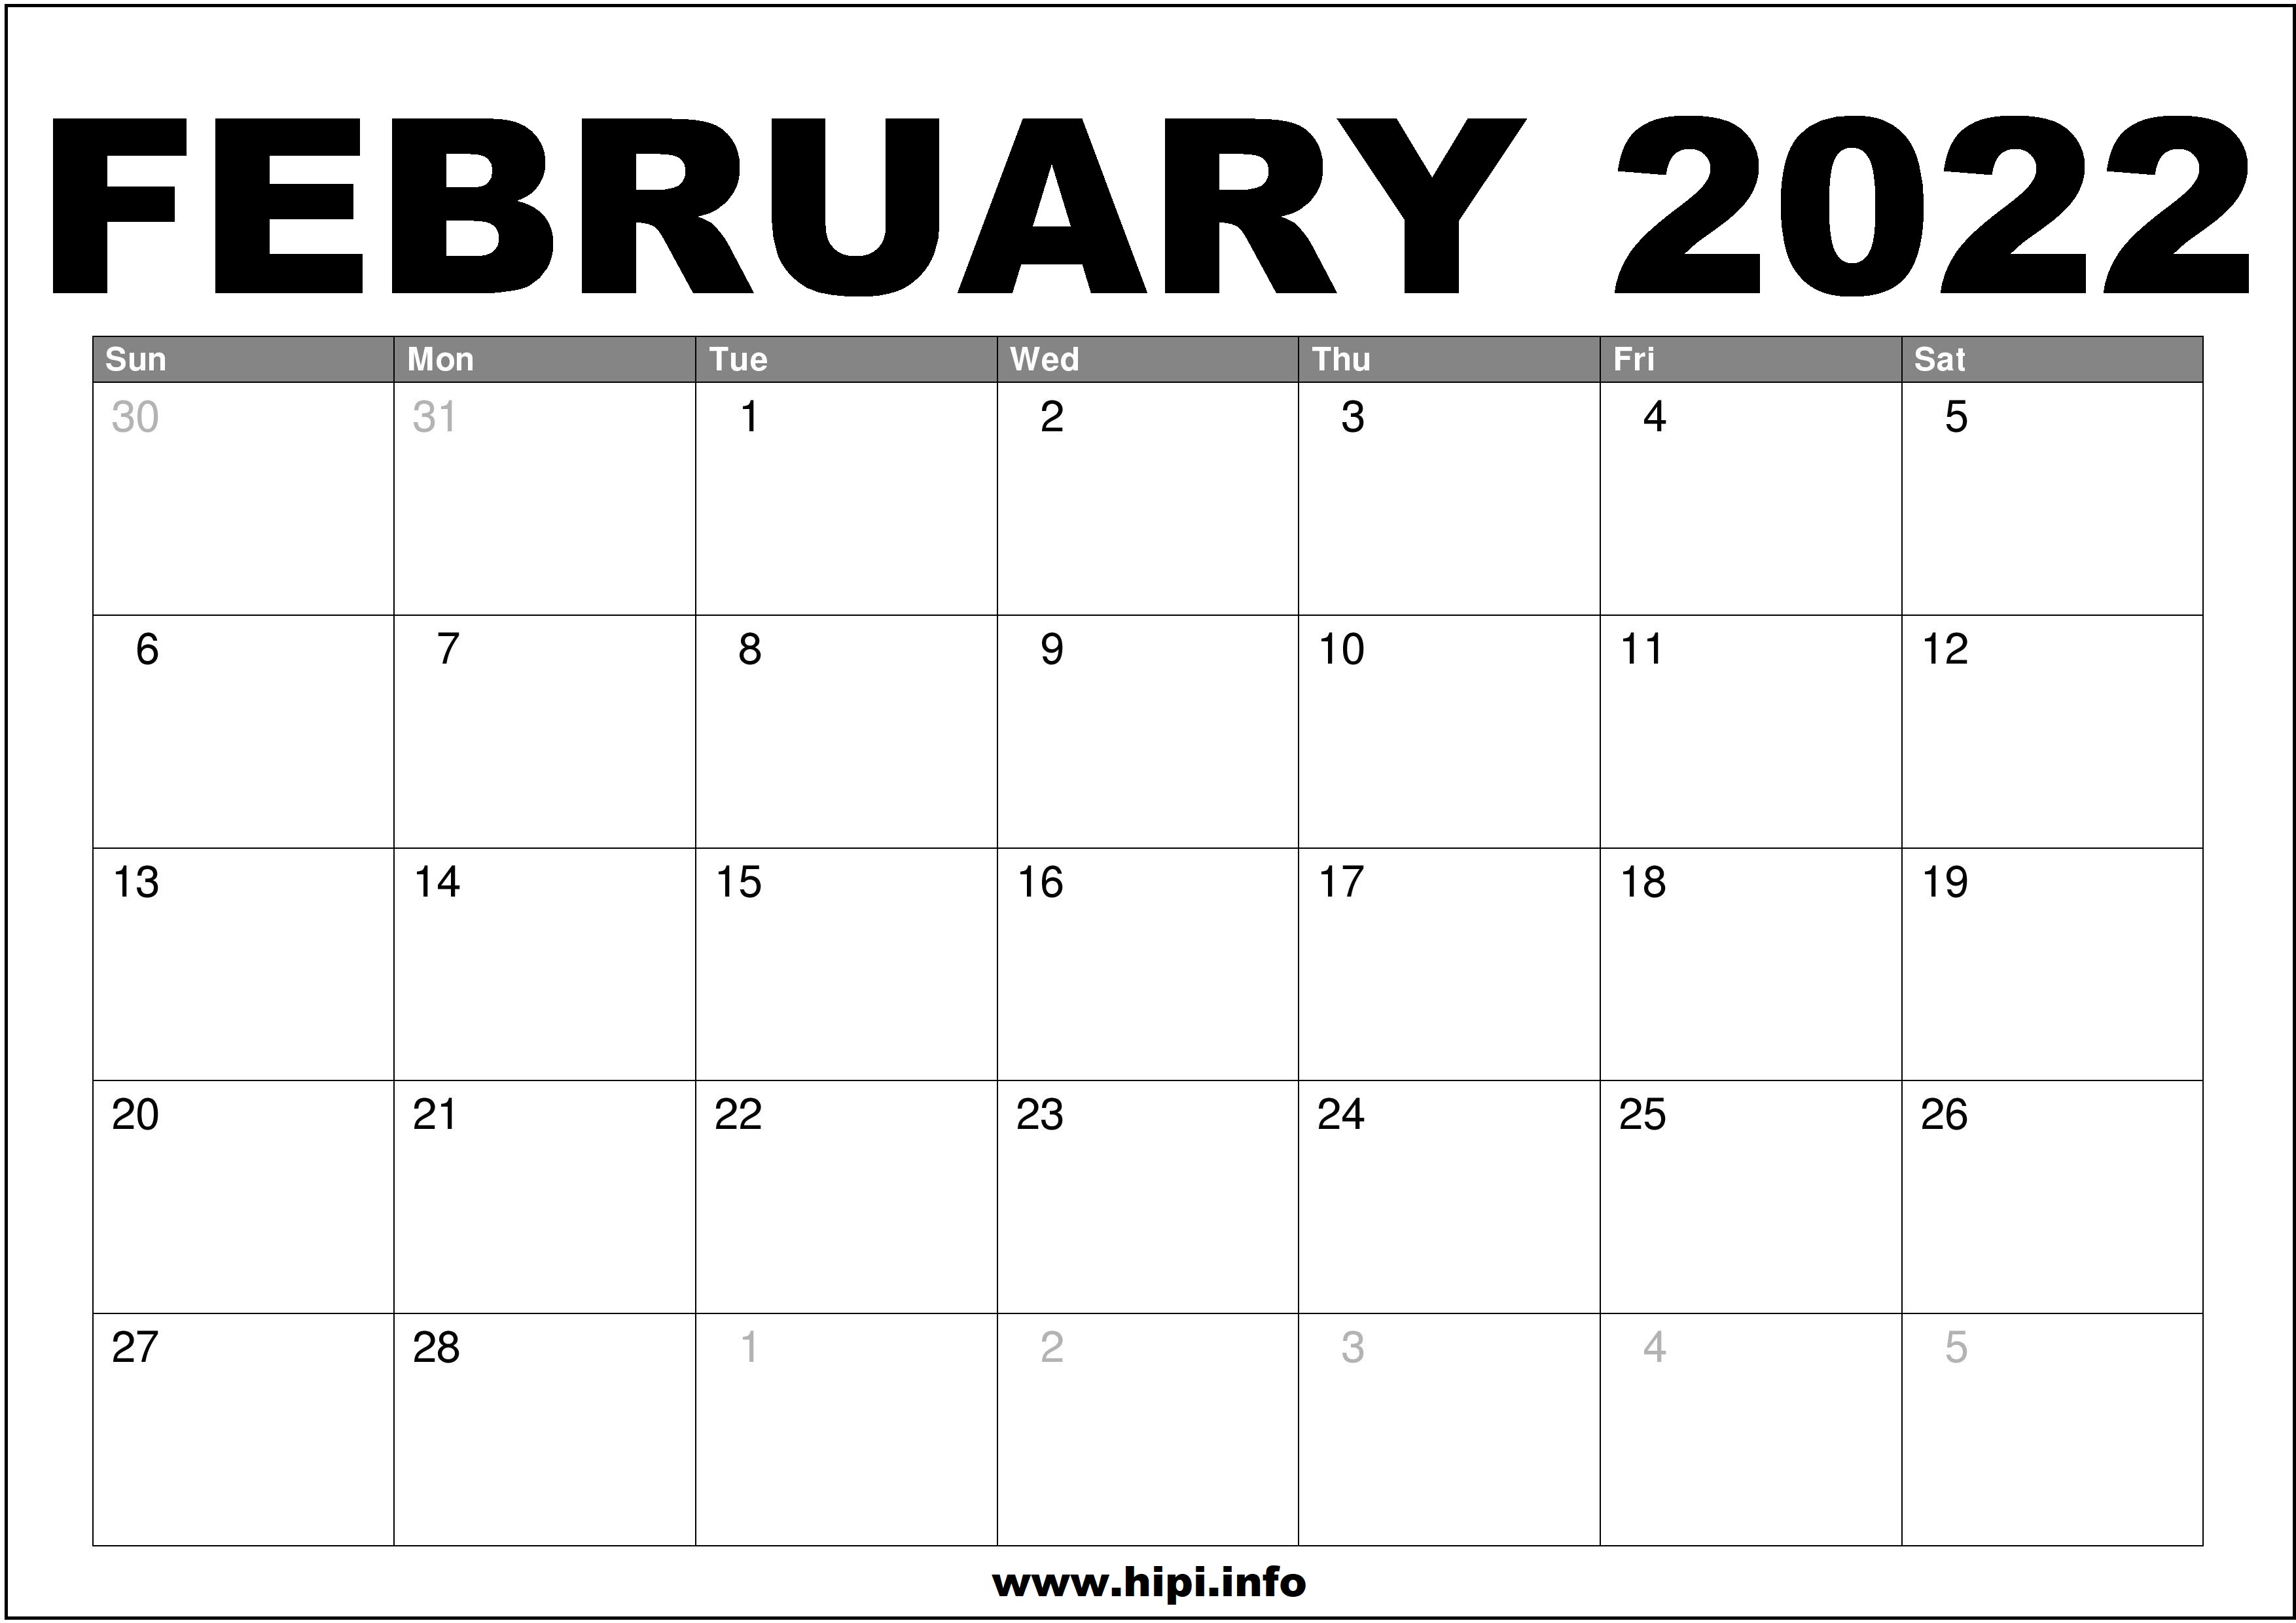 Free Printable Calendar 2022 February February 2022 Calendar Printable Free - Hipi.info | Calendars Printable Free